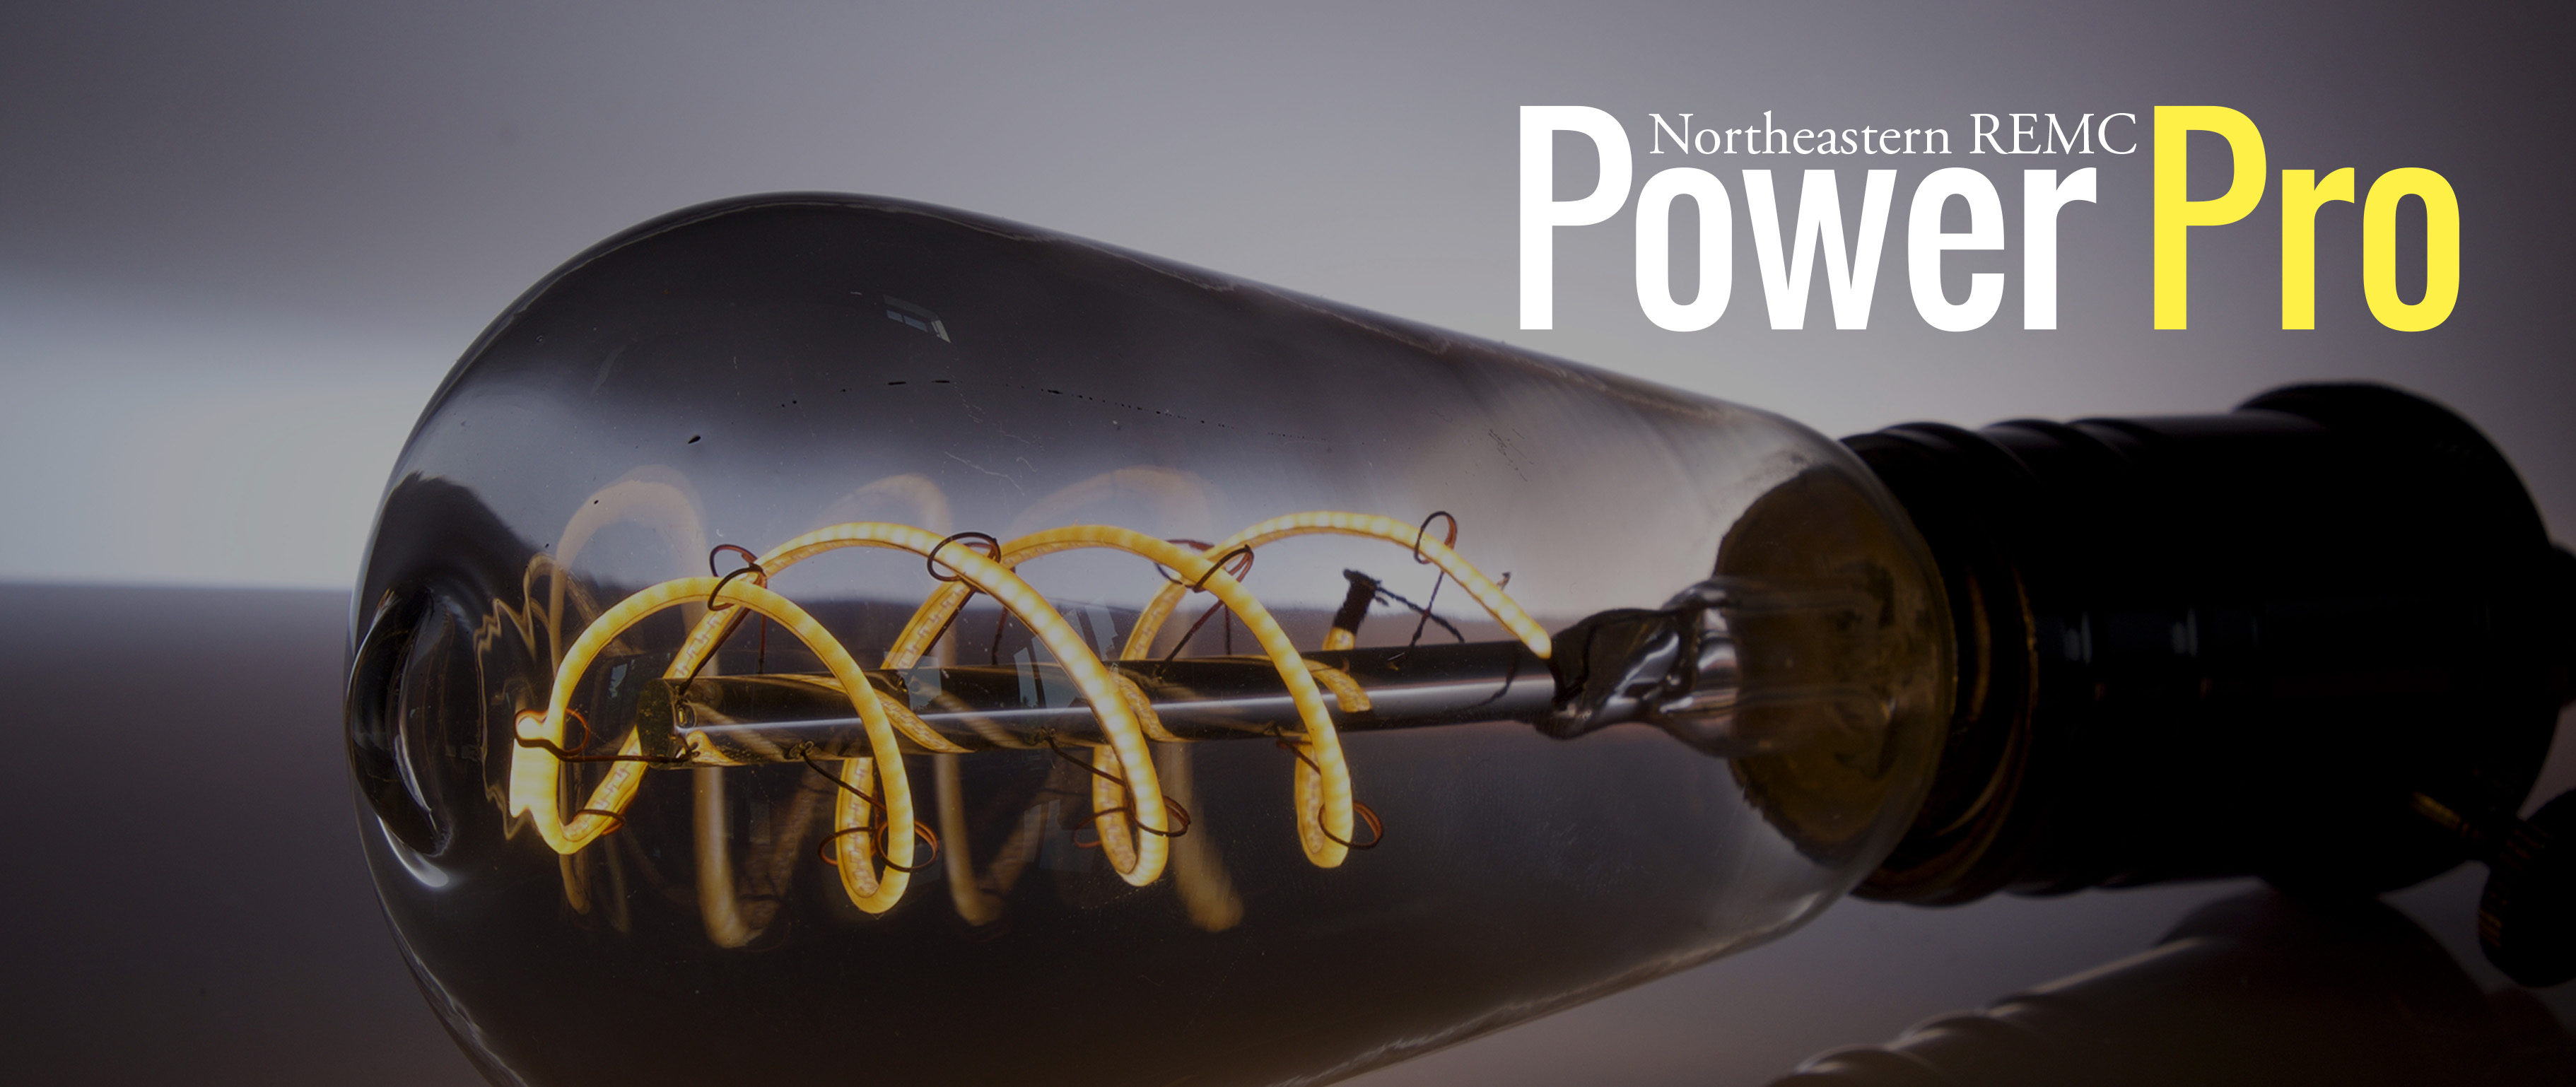 Power Pro Northeastern REMC